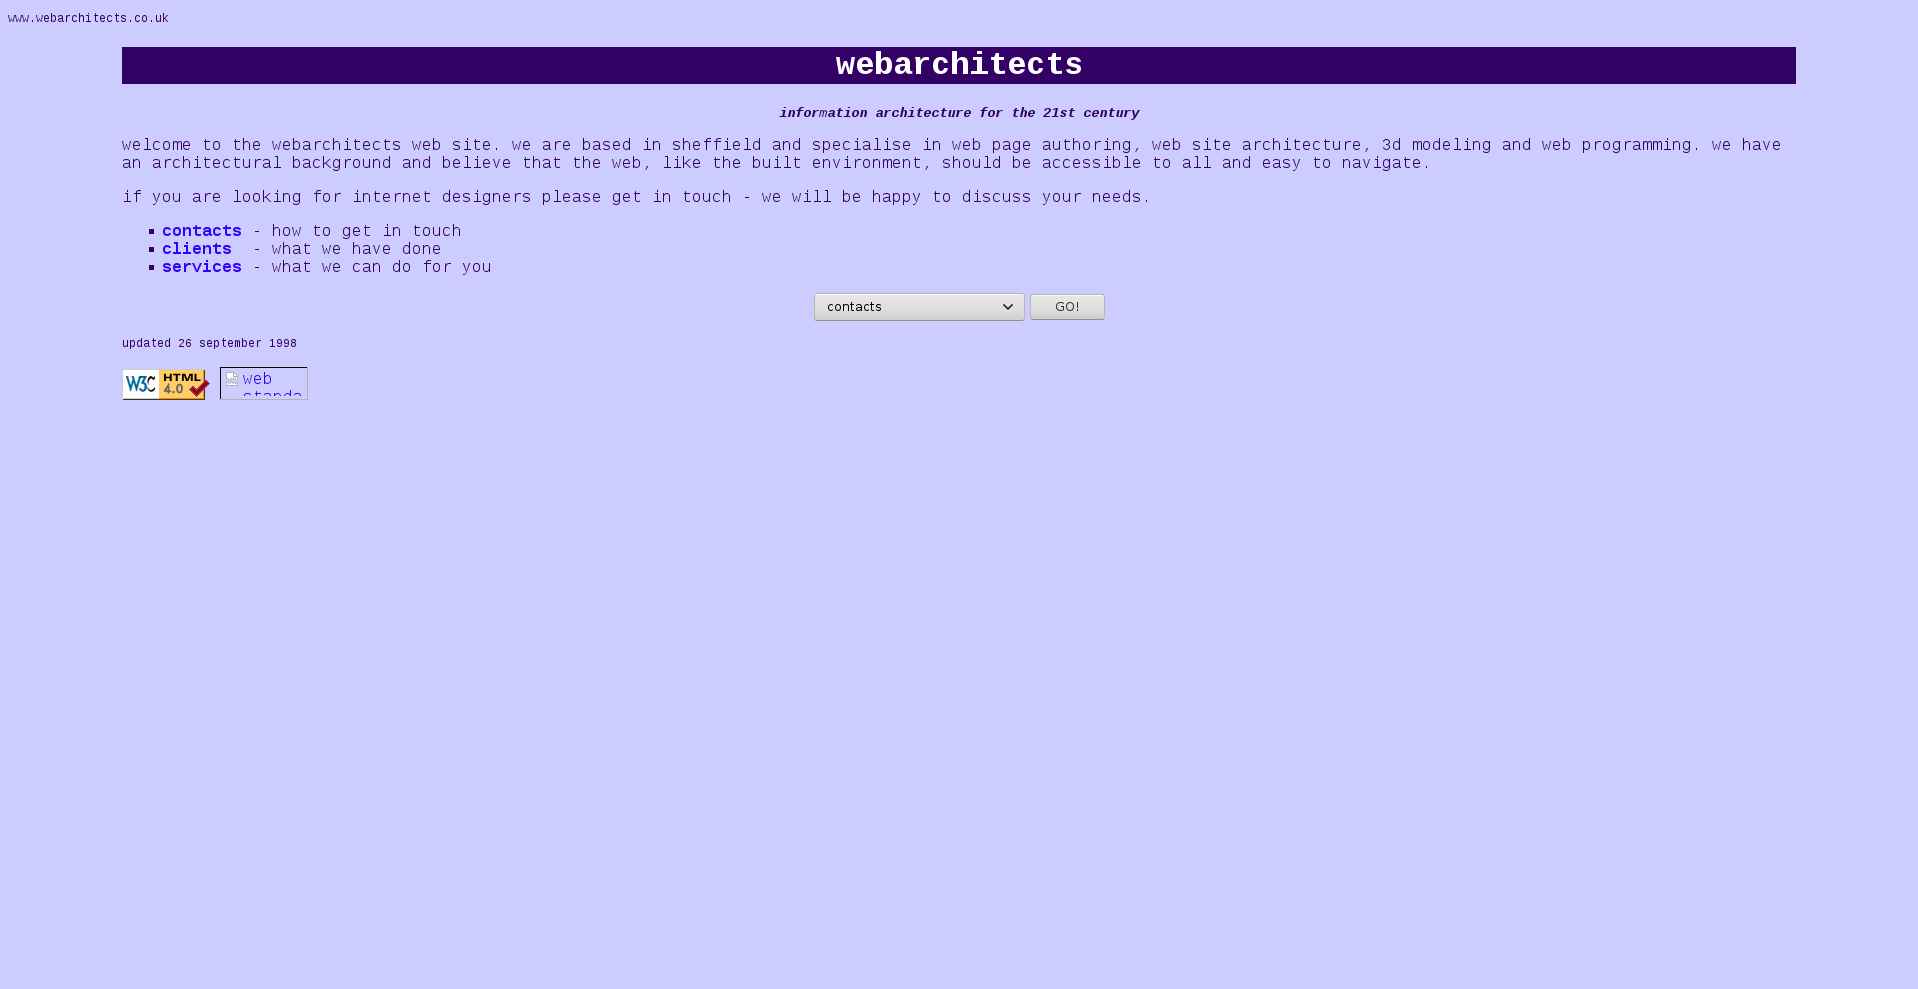 Screenshot of www.webarchitects.co.uk from 1998